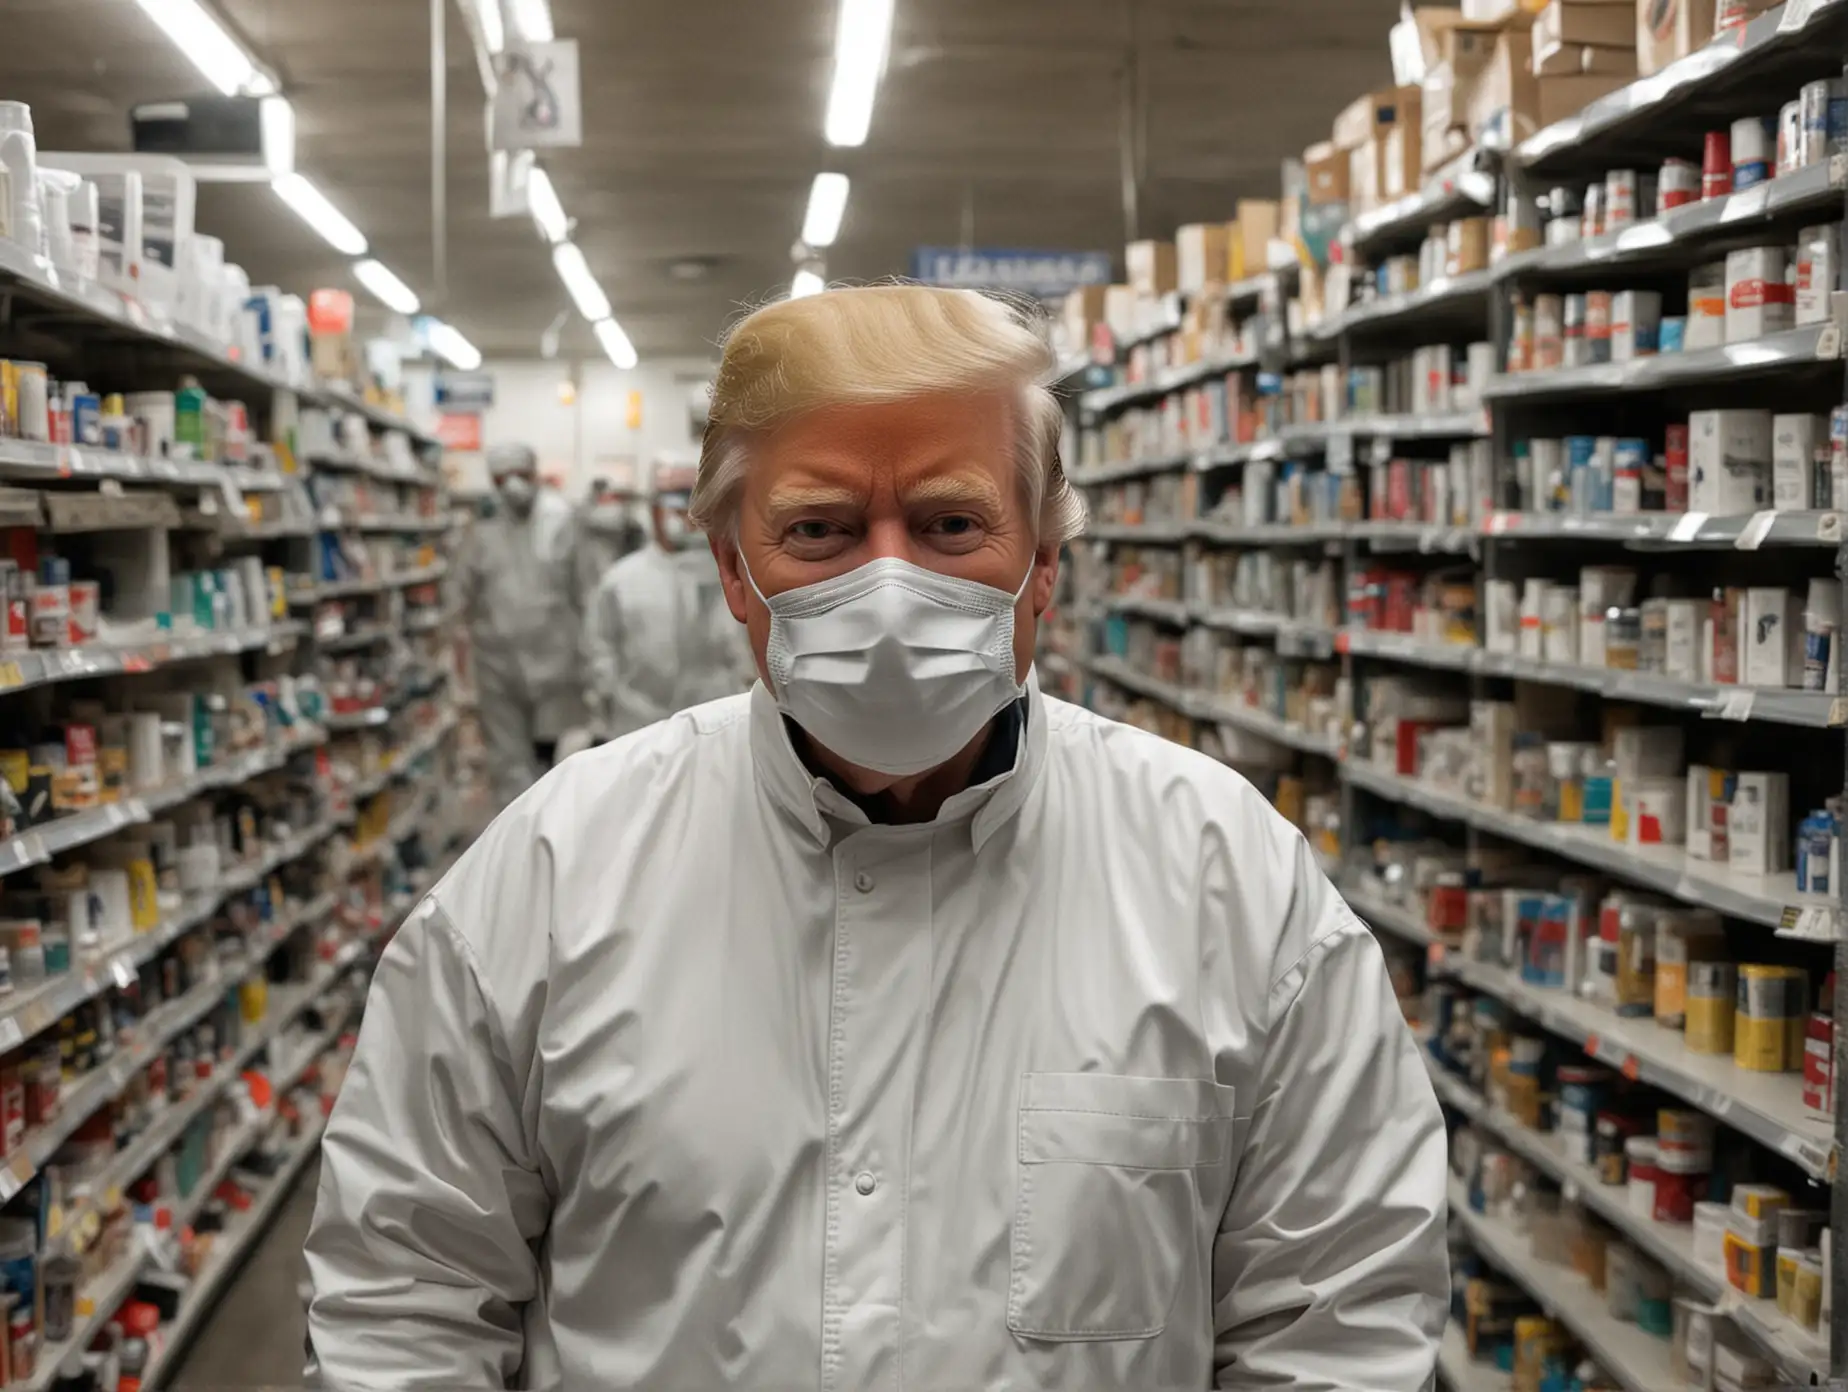 Pandemic Scene Donald Trump in KN95 Mask Amidst Virus Crisis